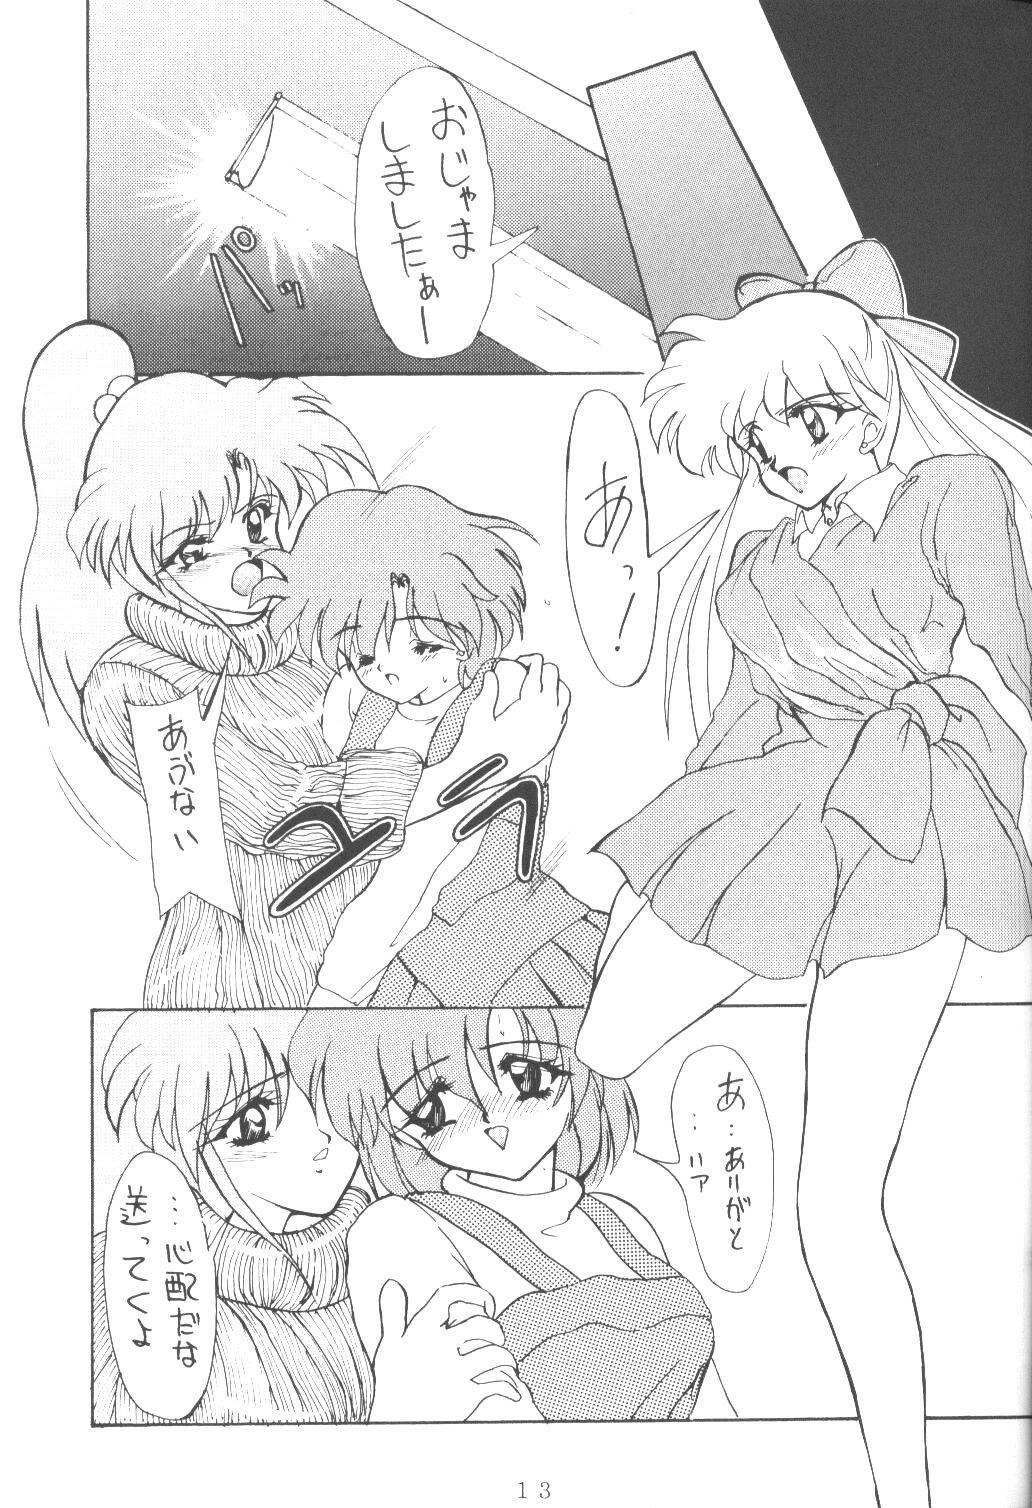 Ex Girlfriend ALIVE AMI LOST - Sailor moon Male - Page 12